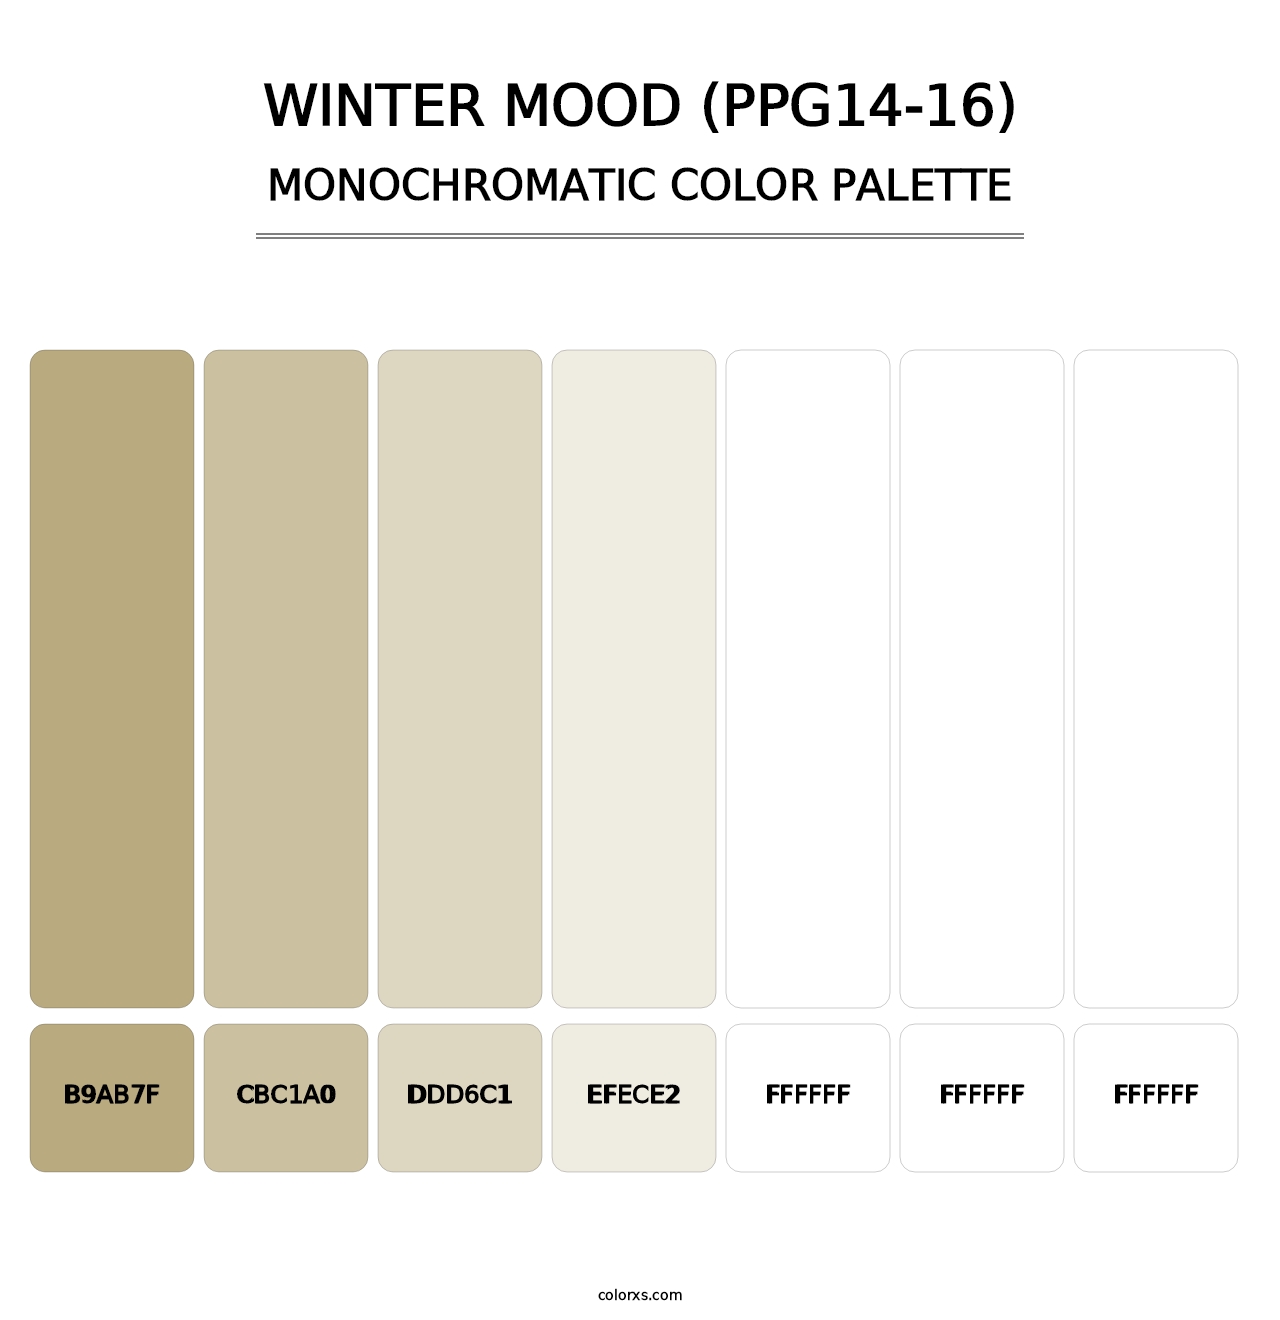 Winter Mood (PPG14-16) - Monochromatic Color Palette